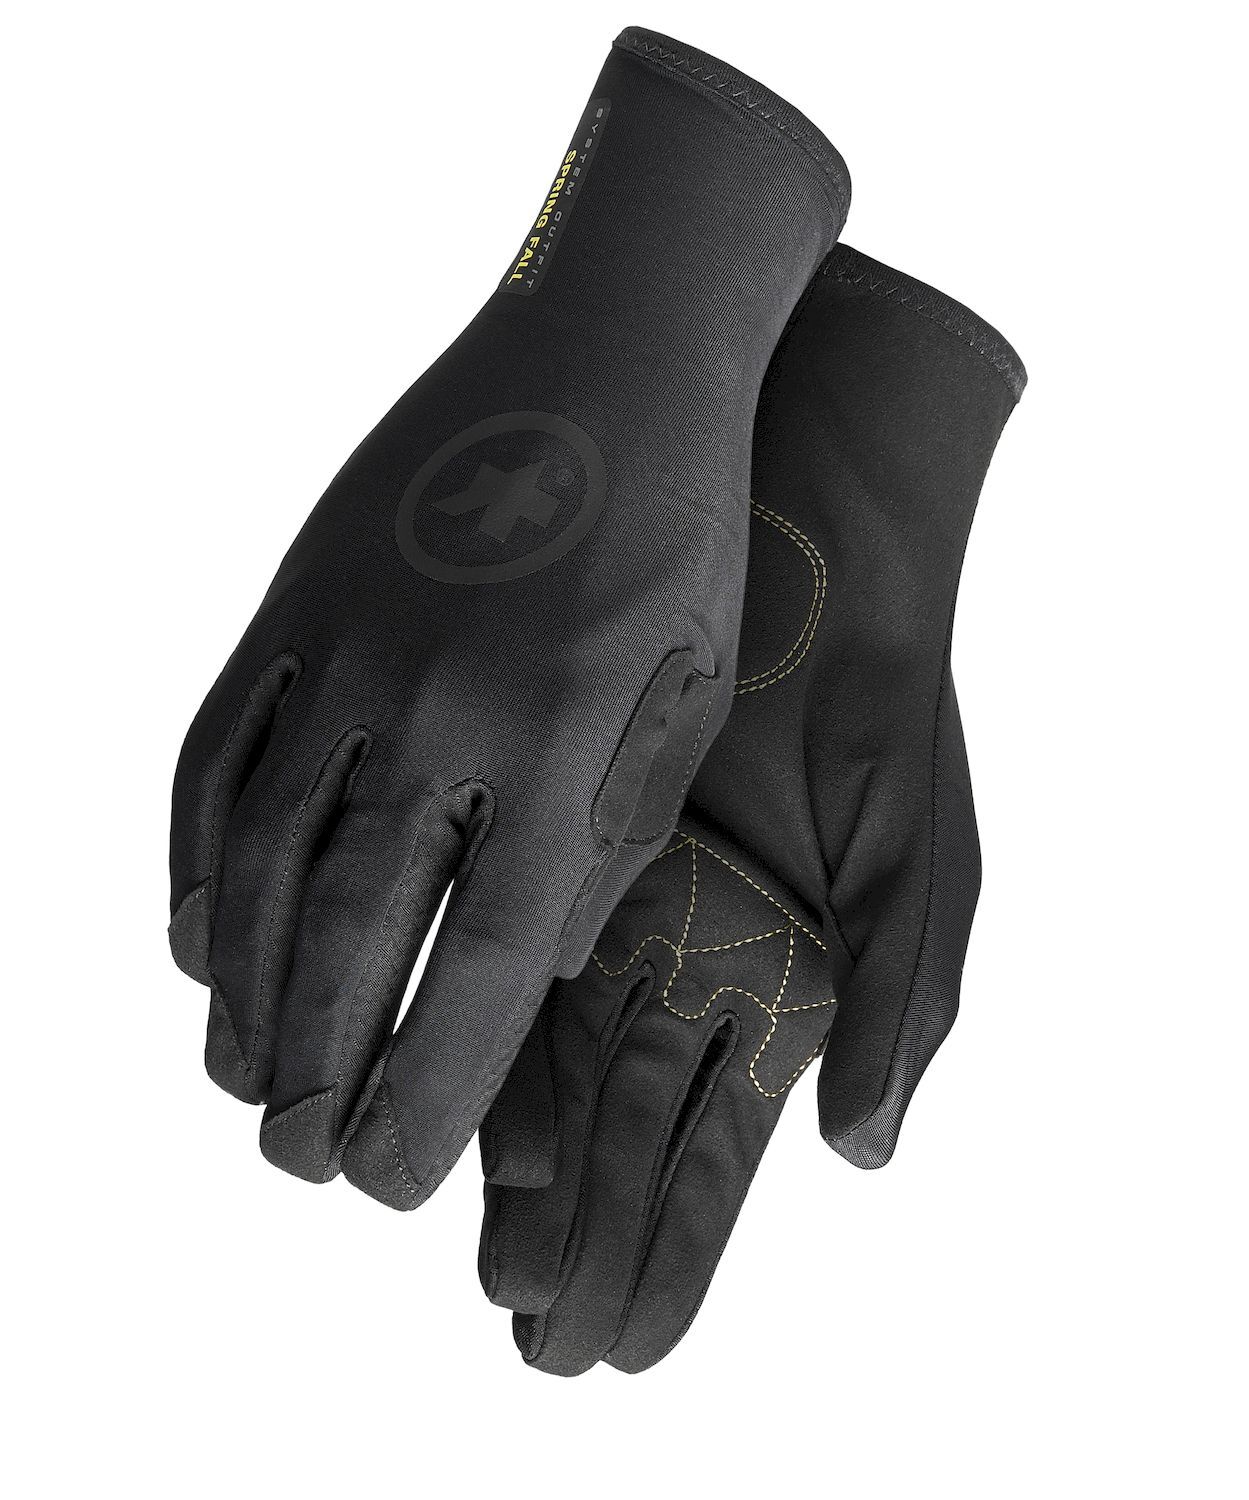 Assos Spring Fall Gloves EVO - Cycling gloves